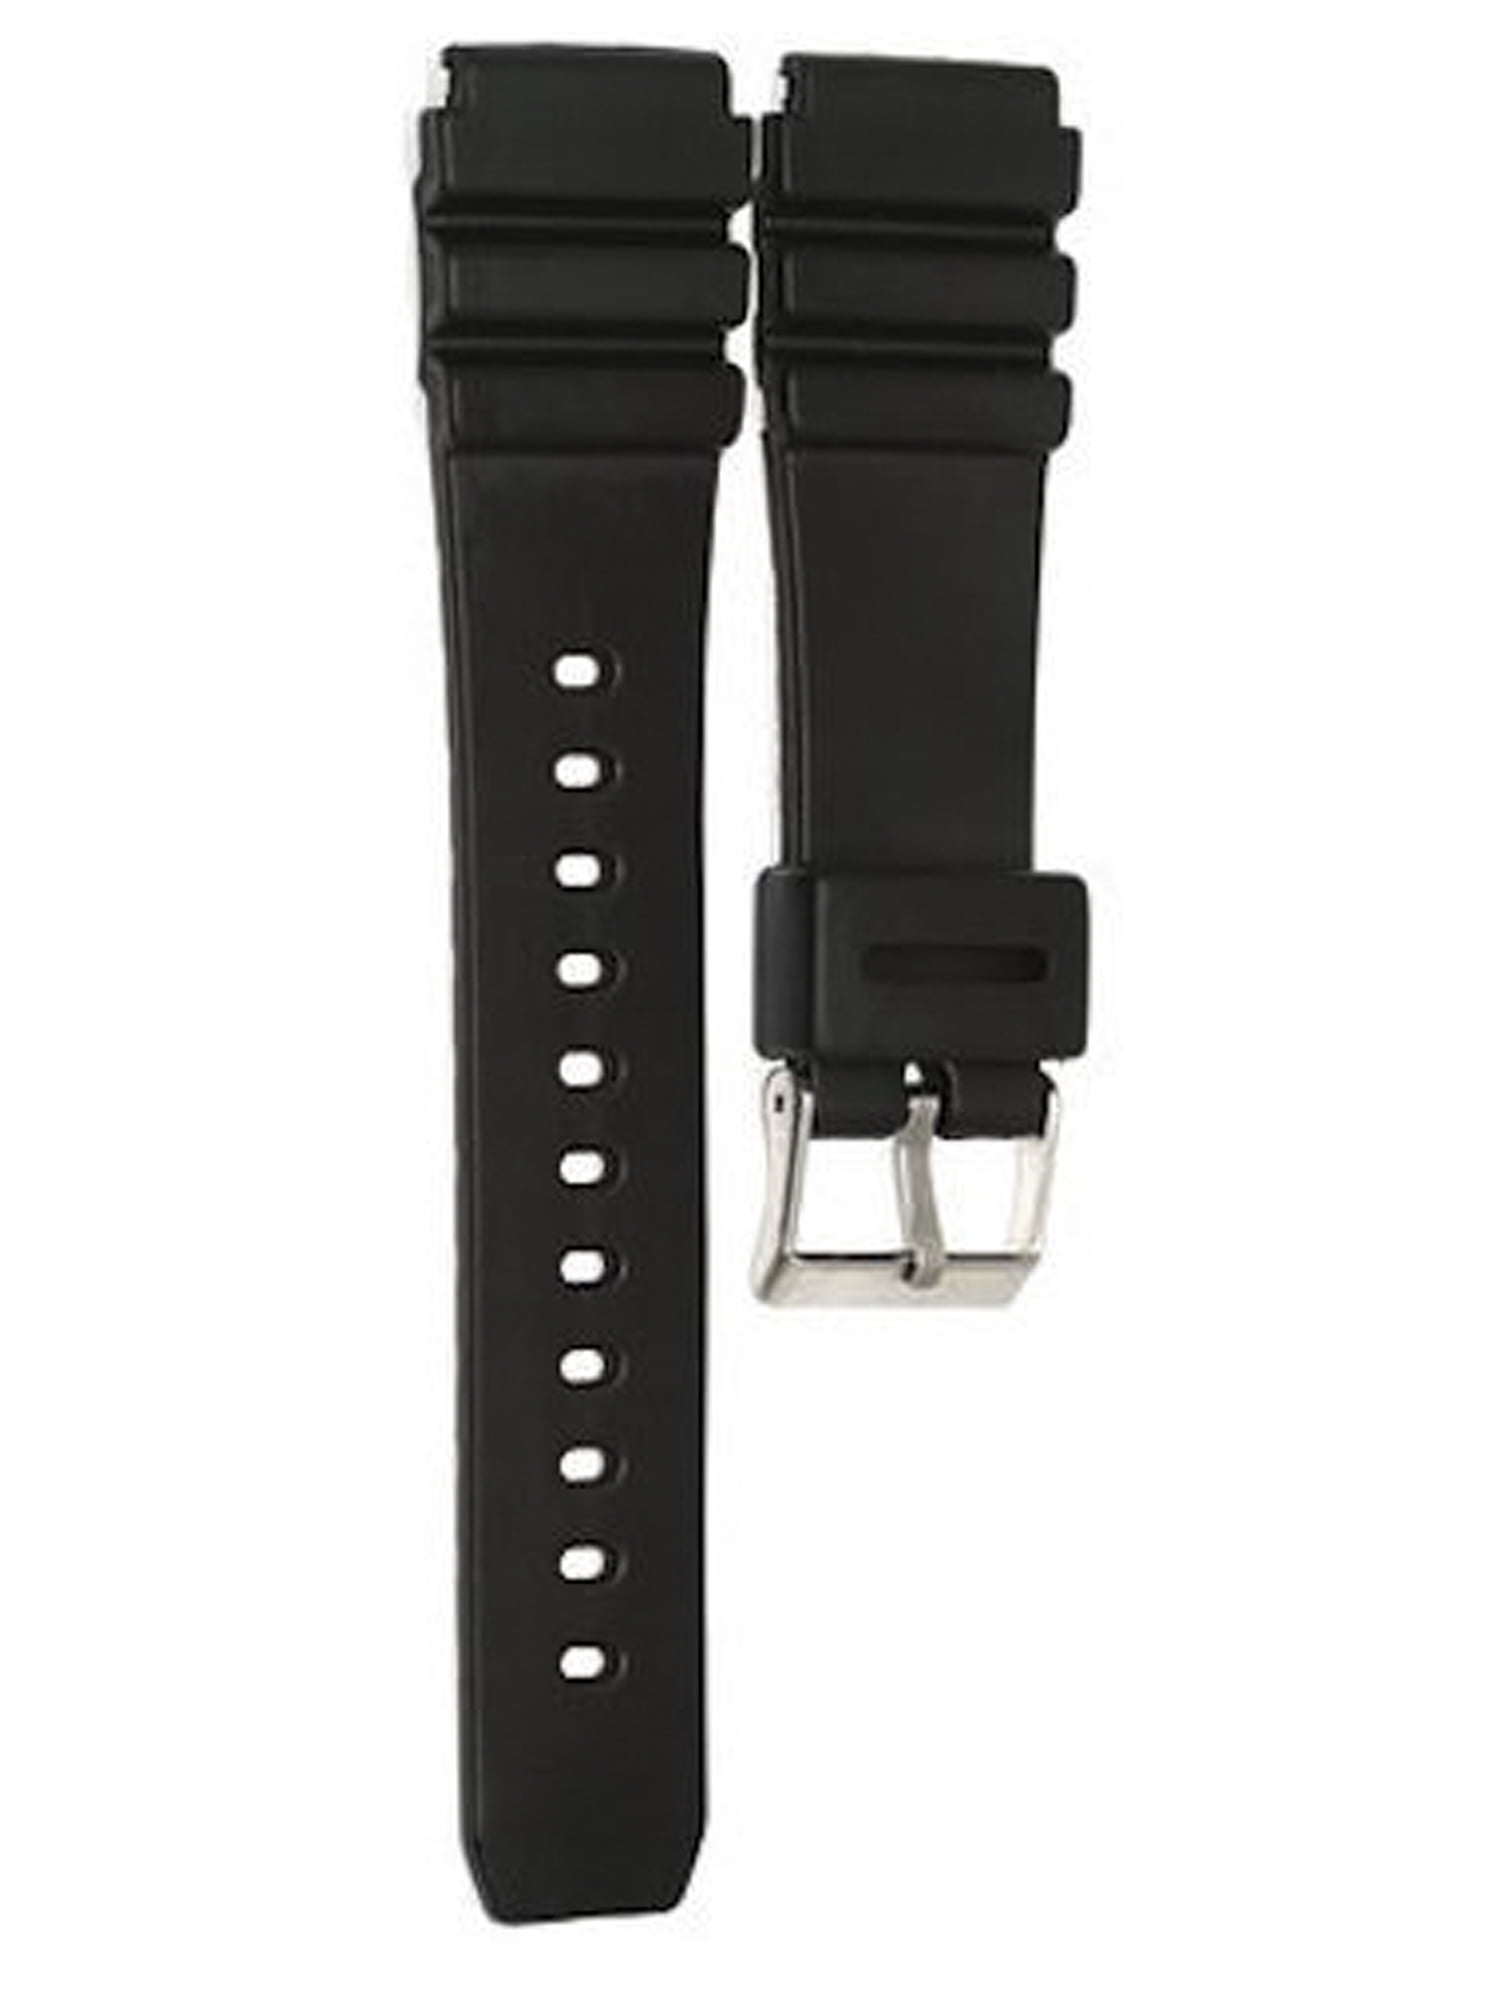 Lår ego Centrum 22mm Black Diver Rubber Watch Band Strap fits Casio AMW-320 AMW-330 AD-520  MD-70 - Walmart.com